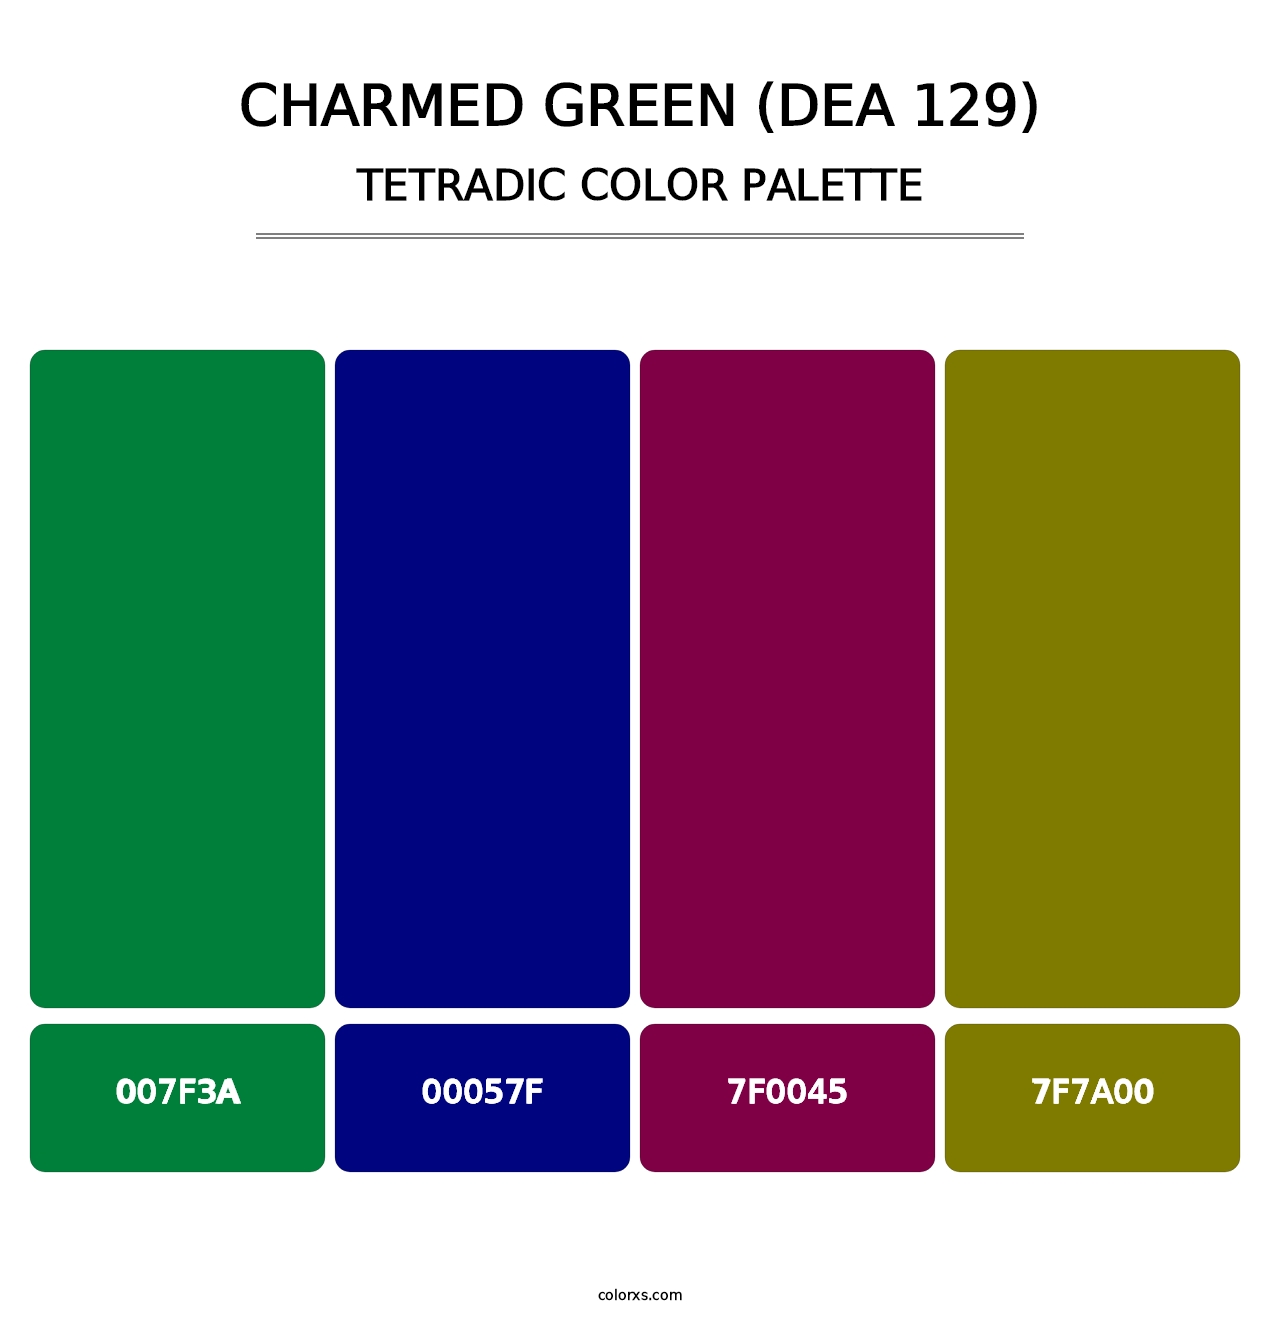 Charmed Green (DEA 129) - Tetradic Color Palette